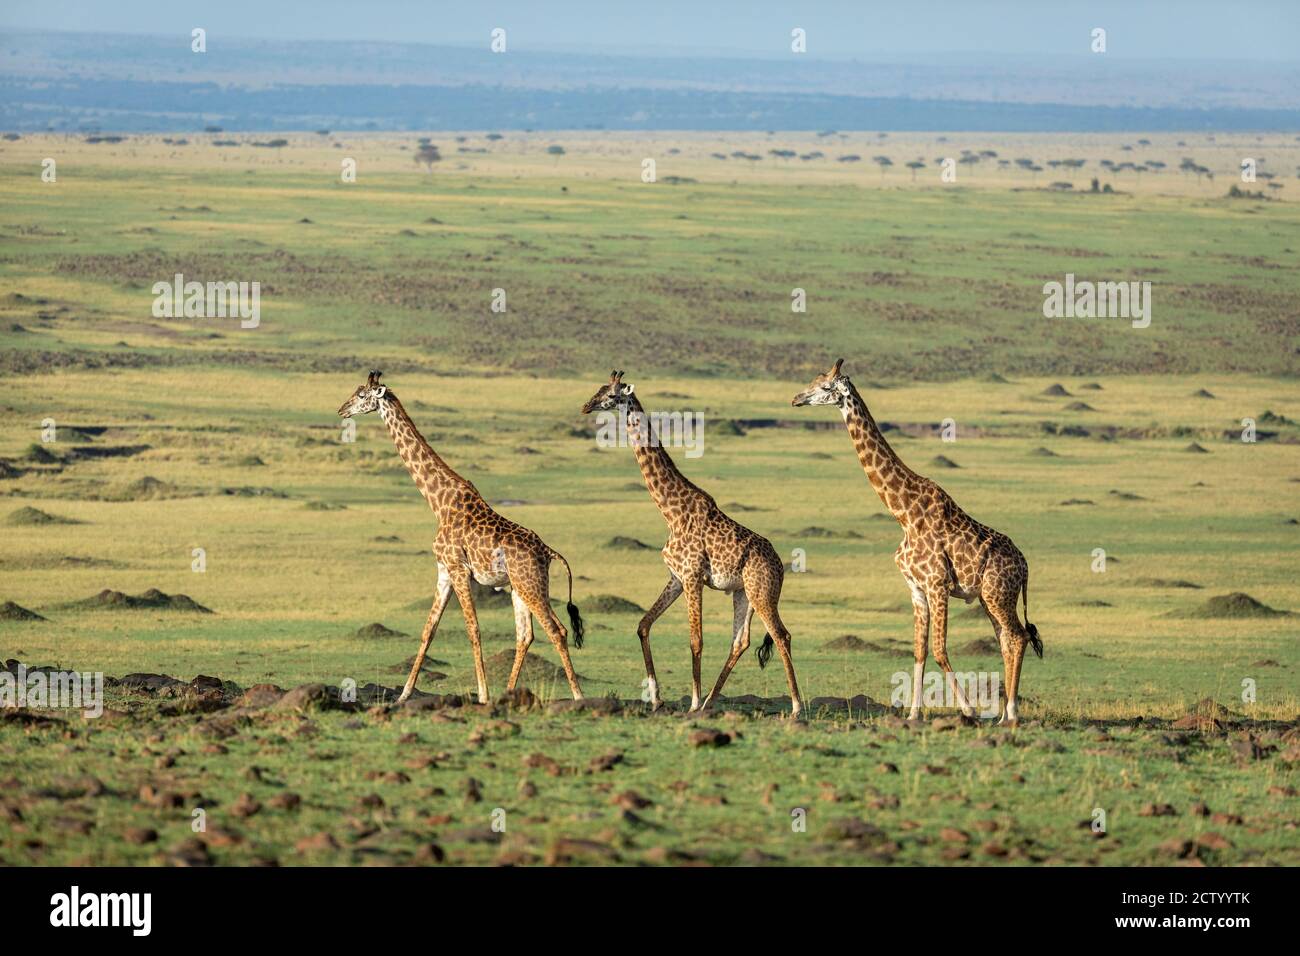 Three adult giraffes walking in line in golden sunlight in Masai Mara in Kenya Stock Photo